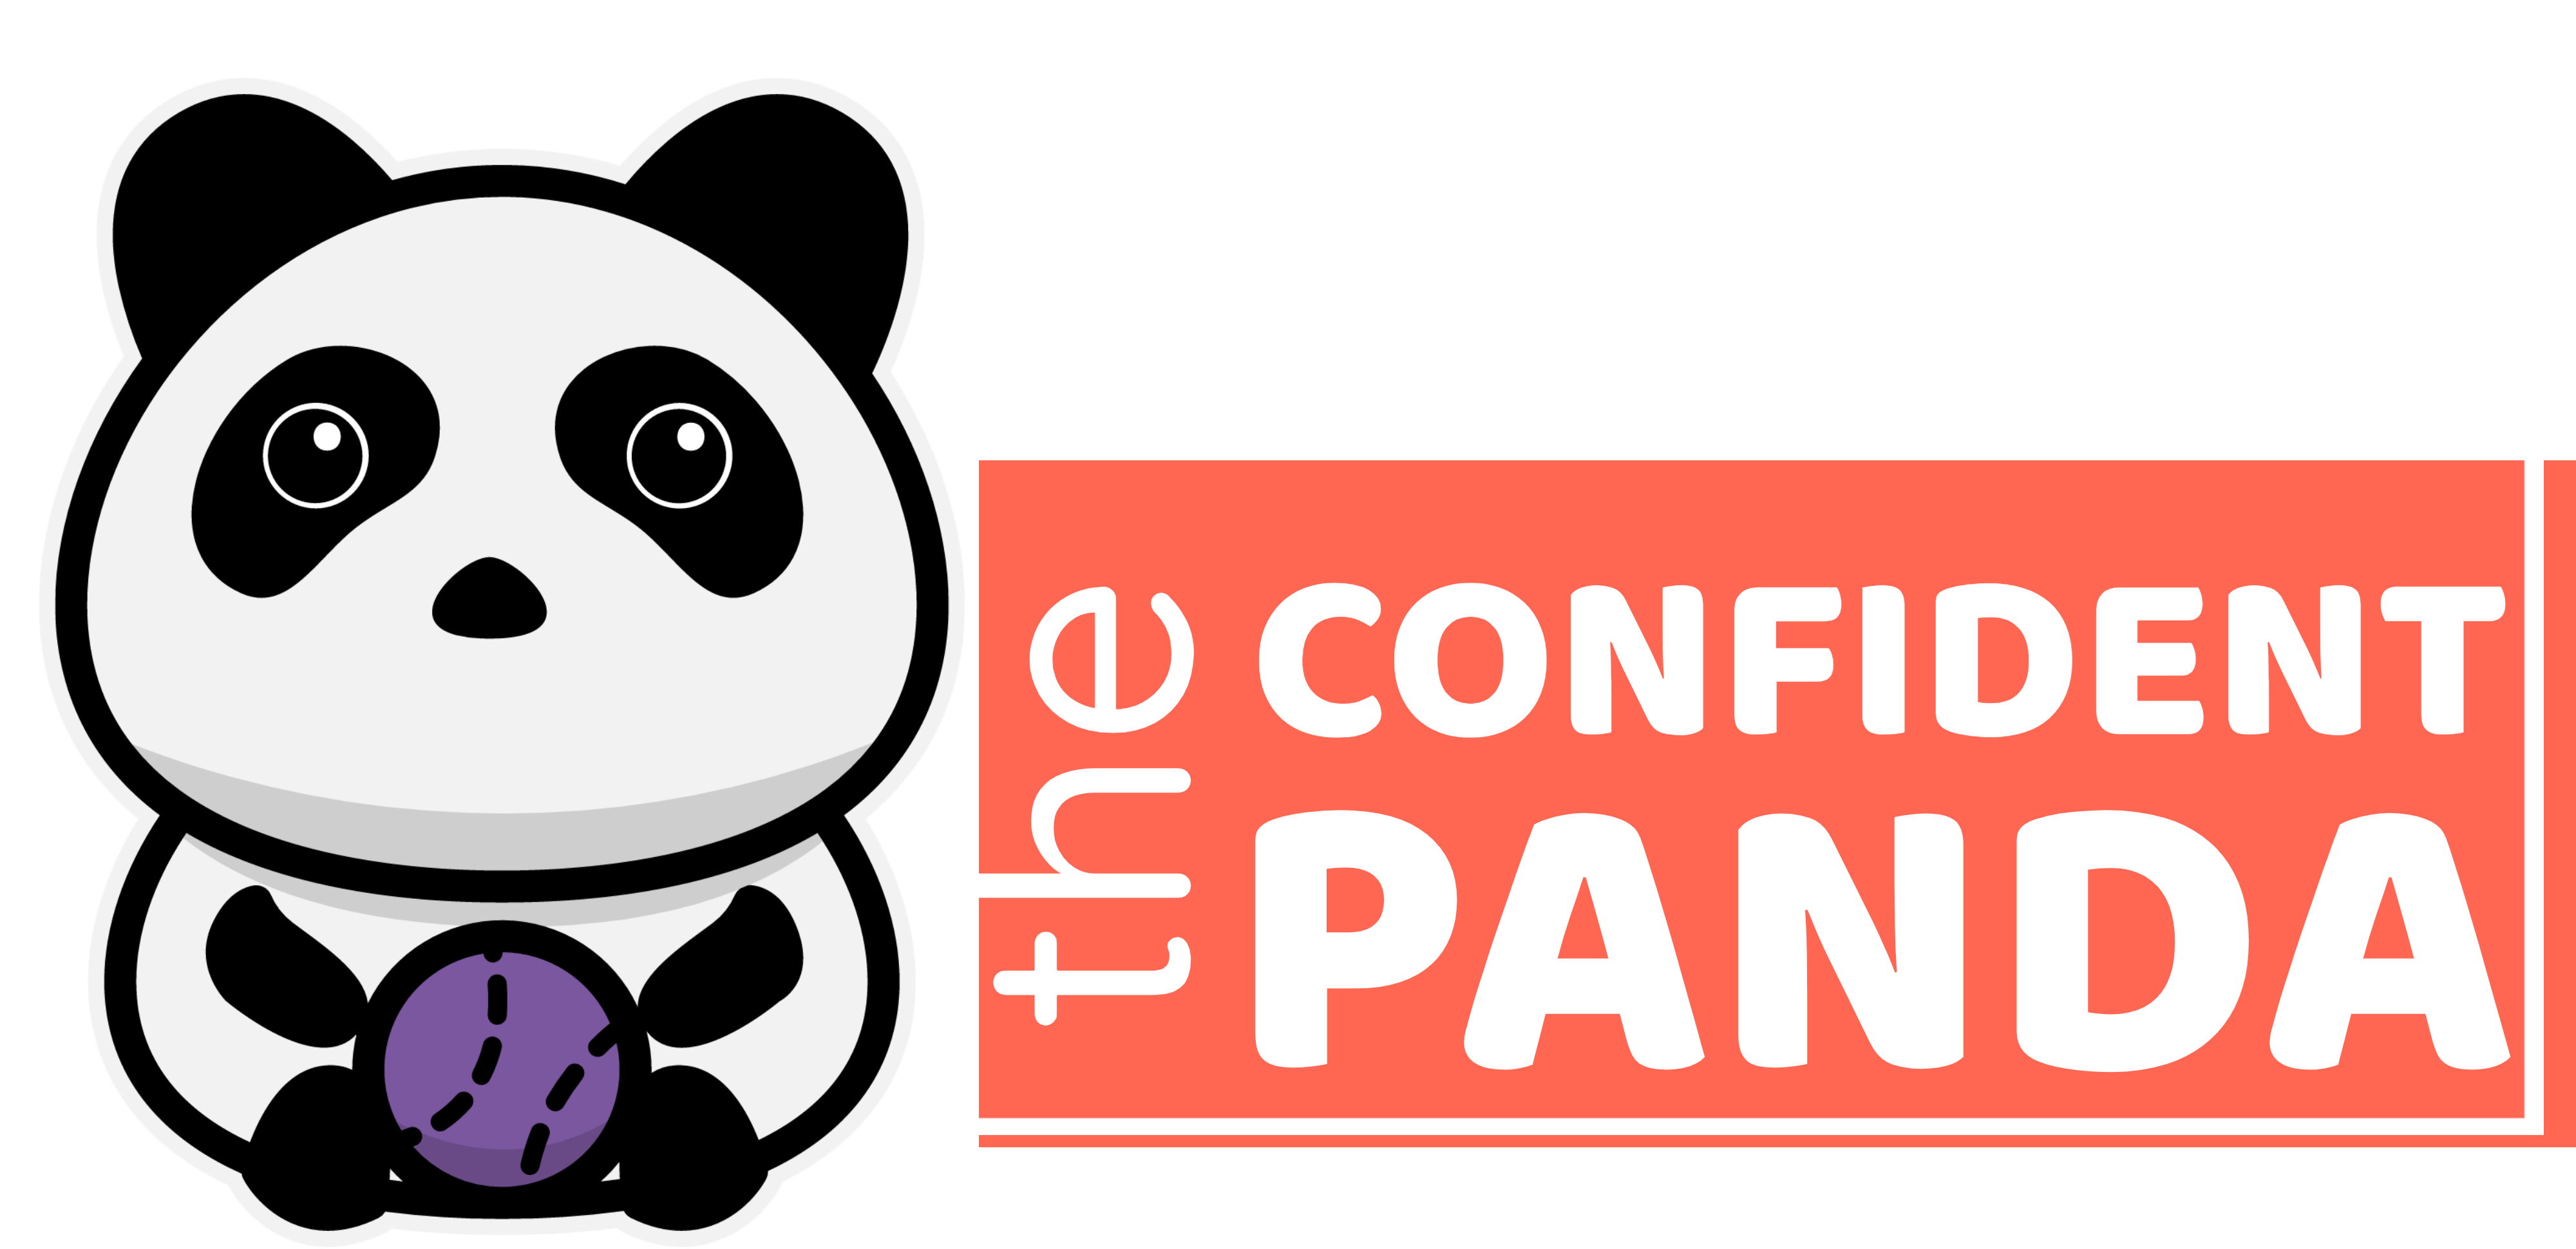 The Confident Panda